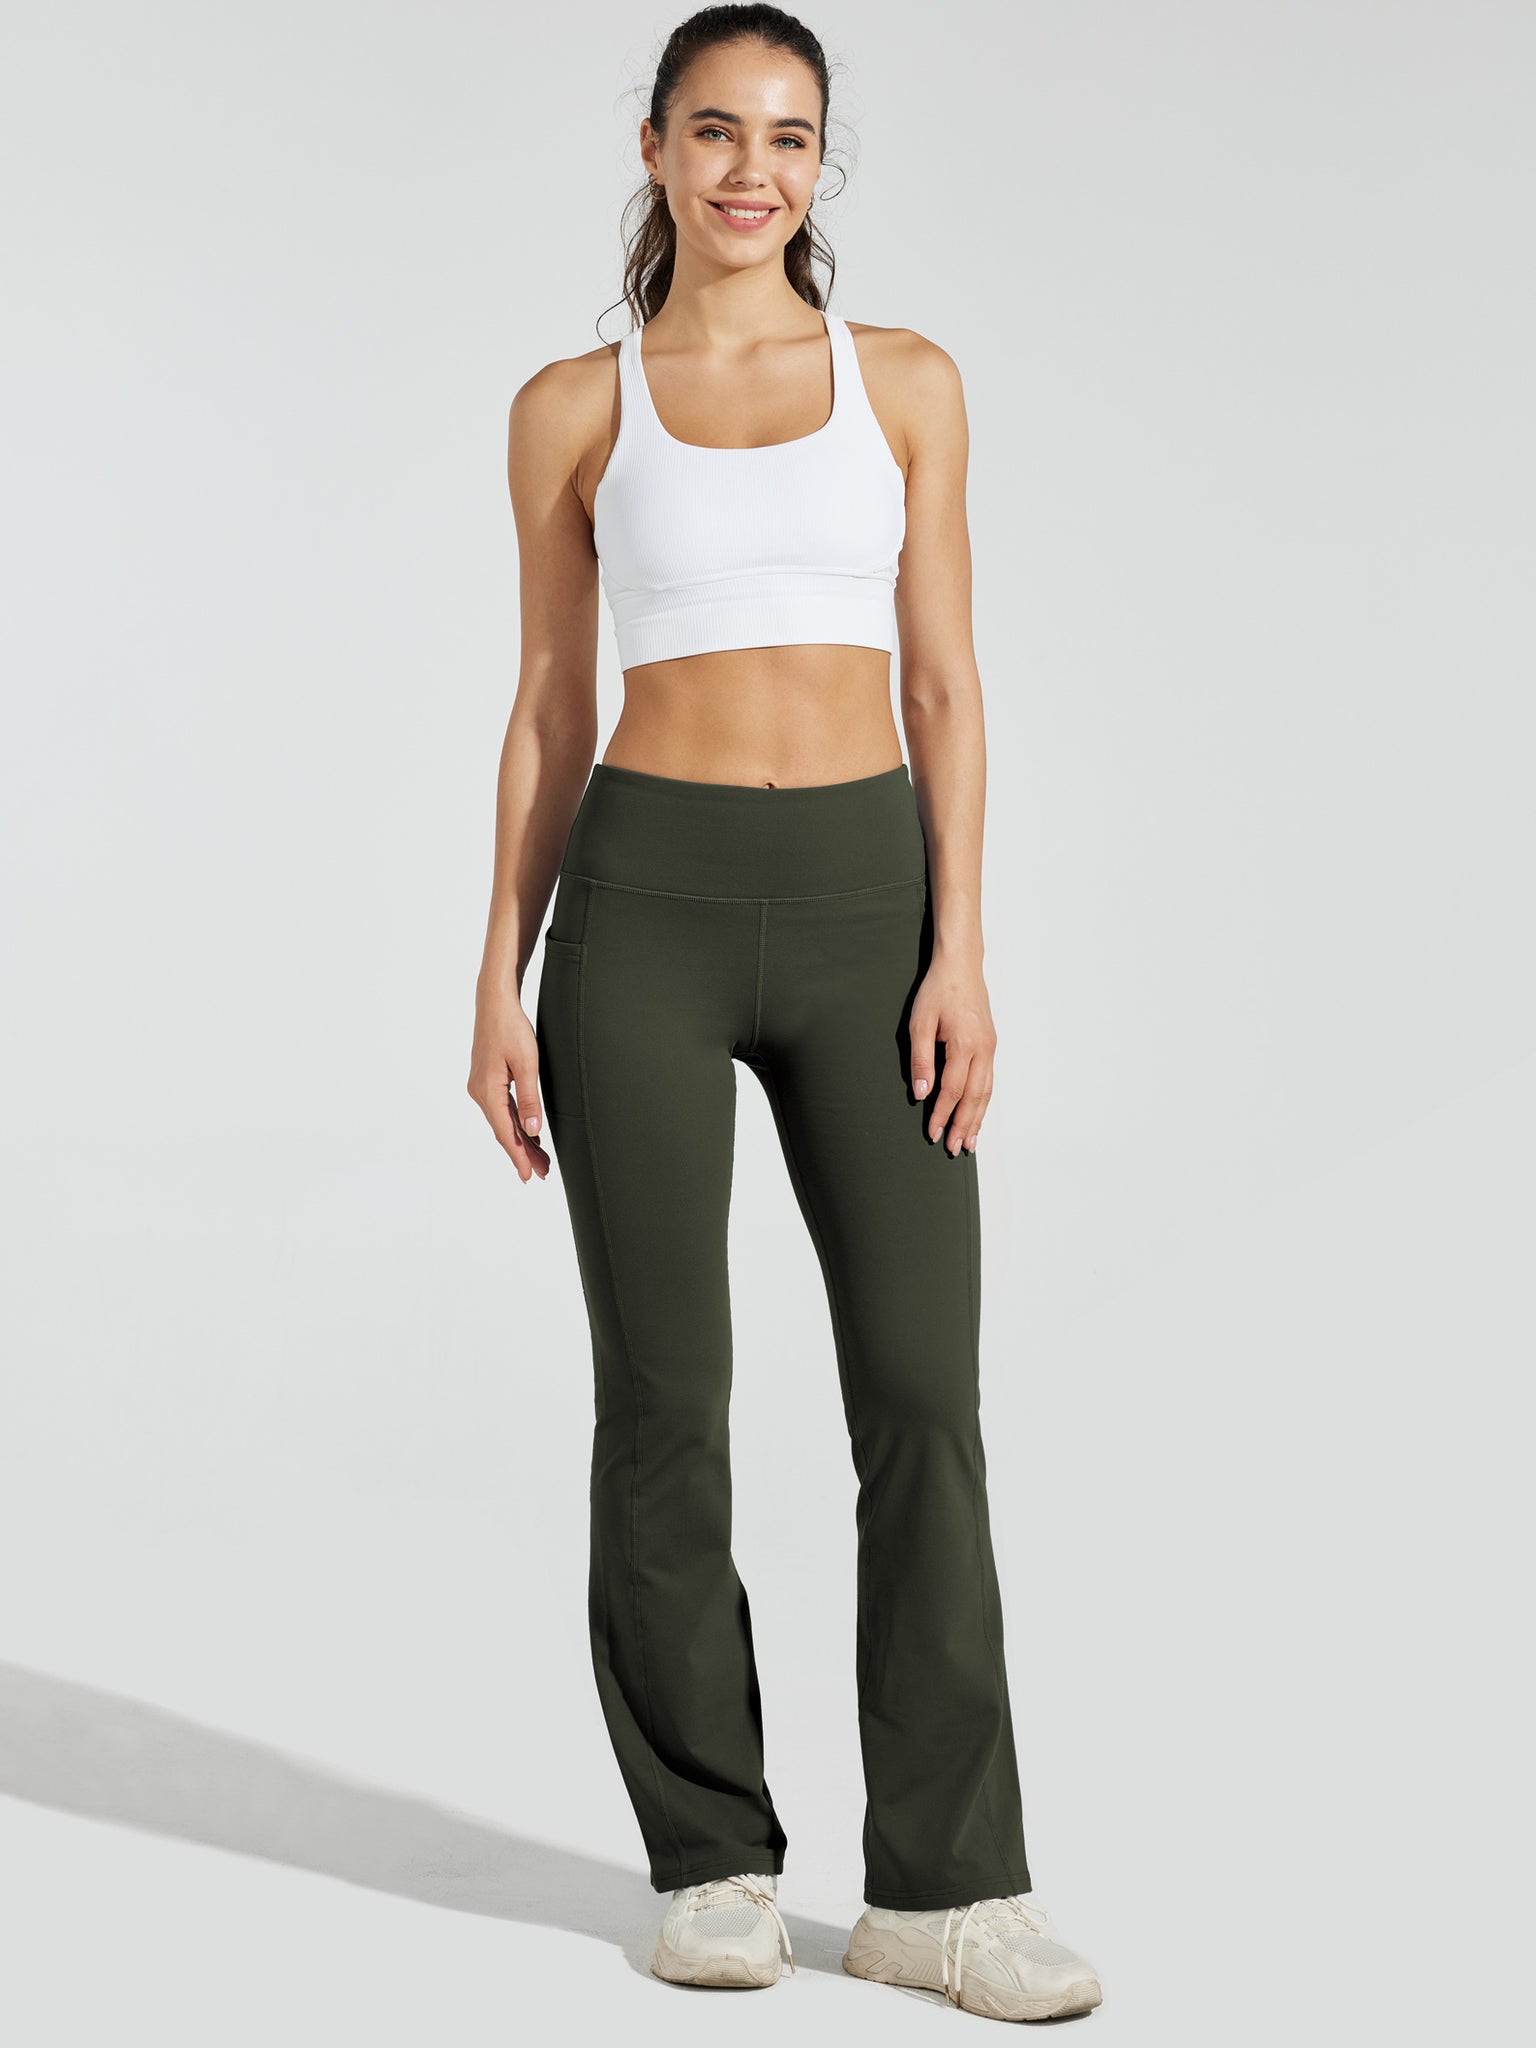 Women's Fleece Lined Bootcut Yoga Pants_Olive_model3